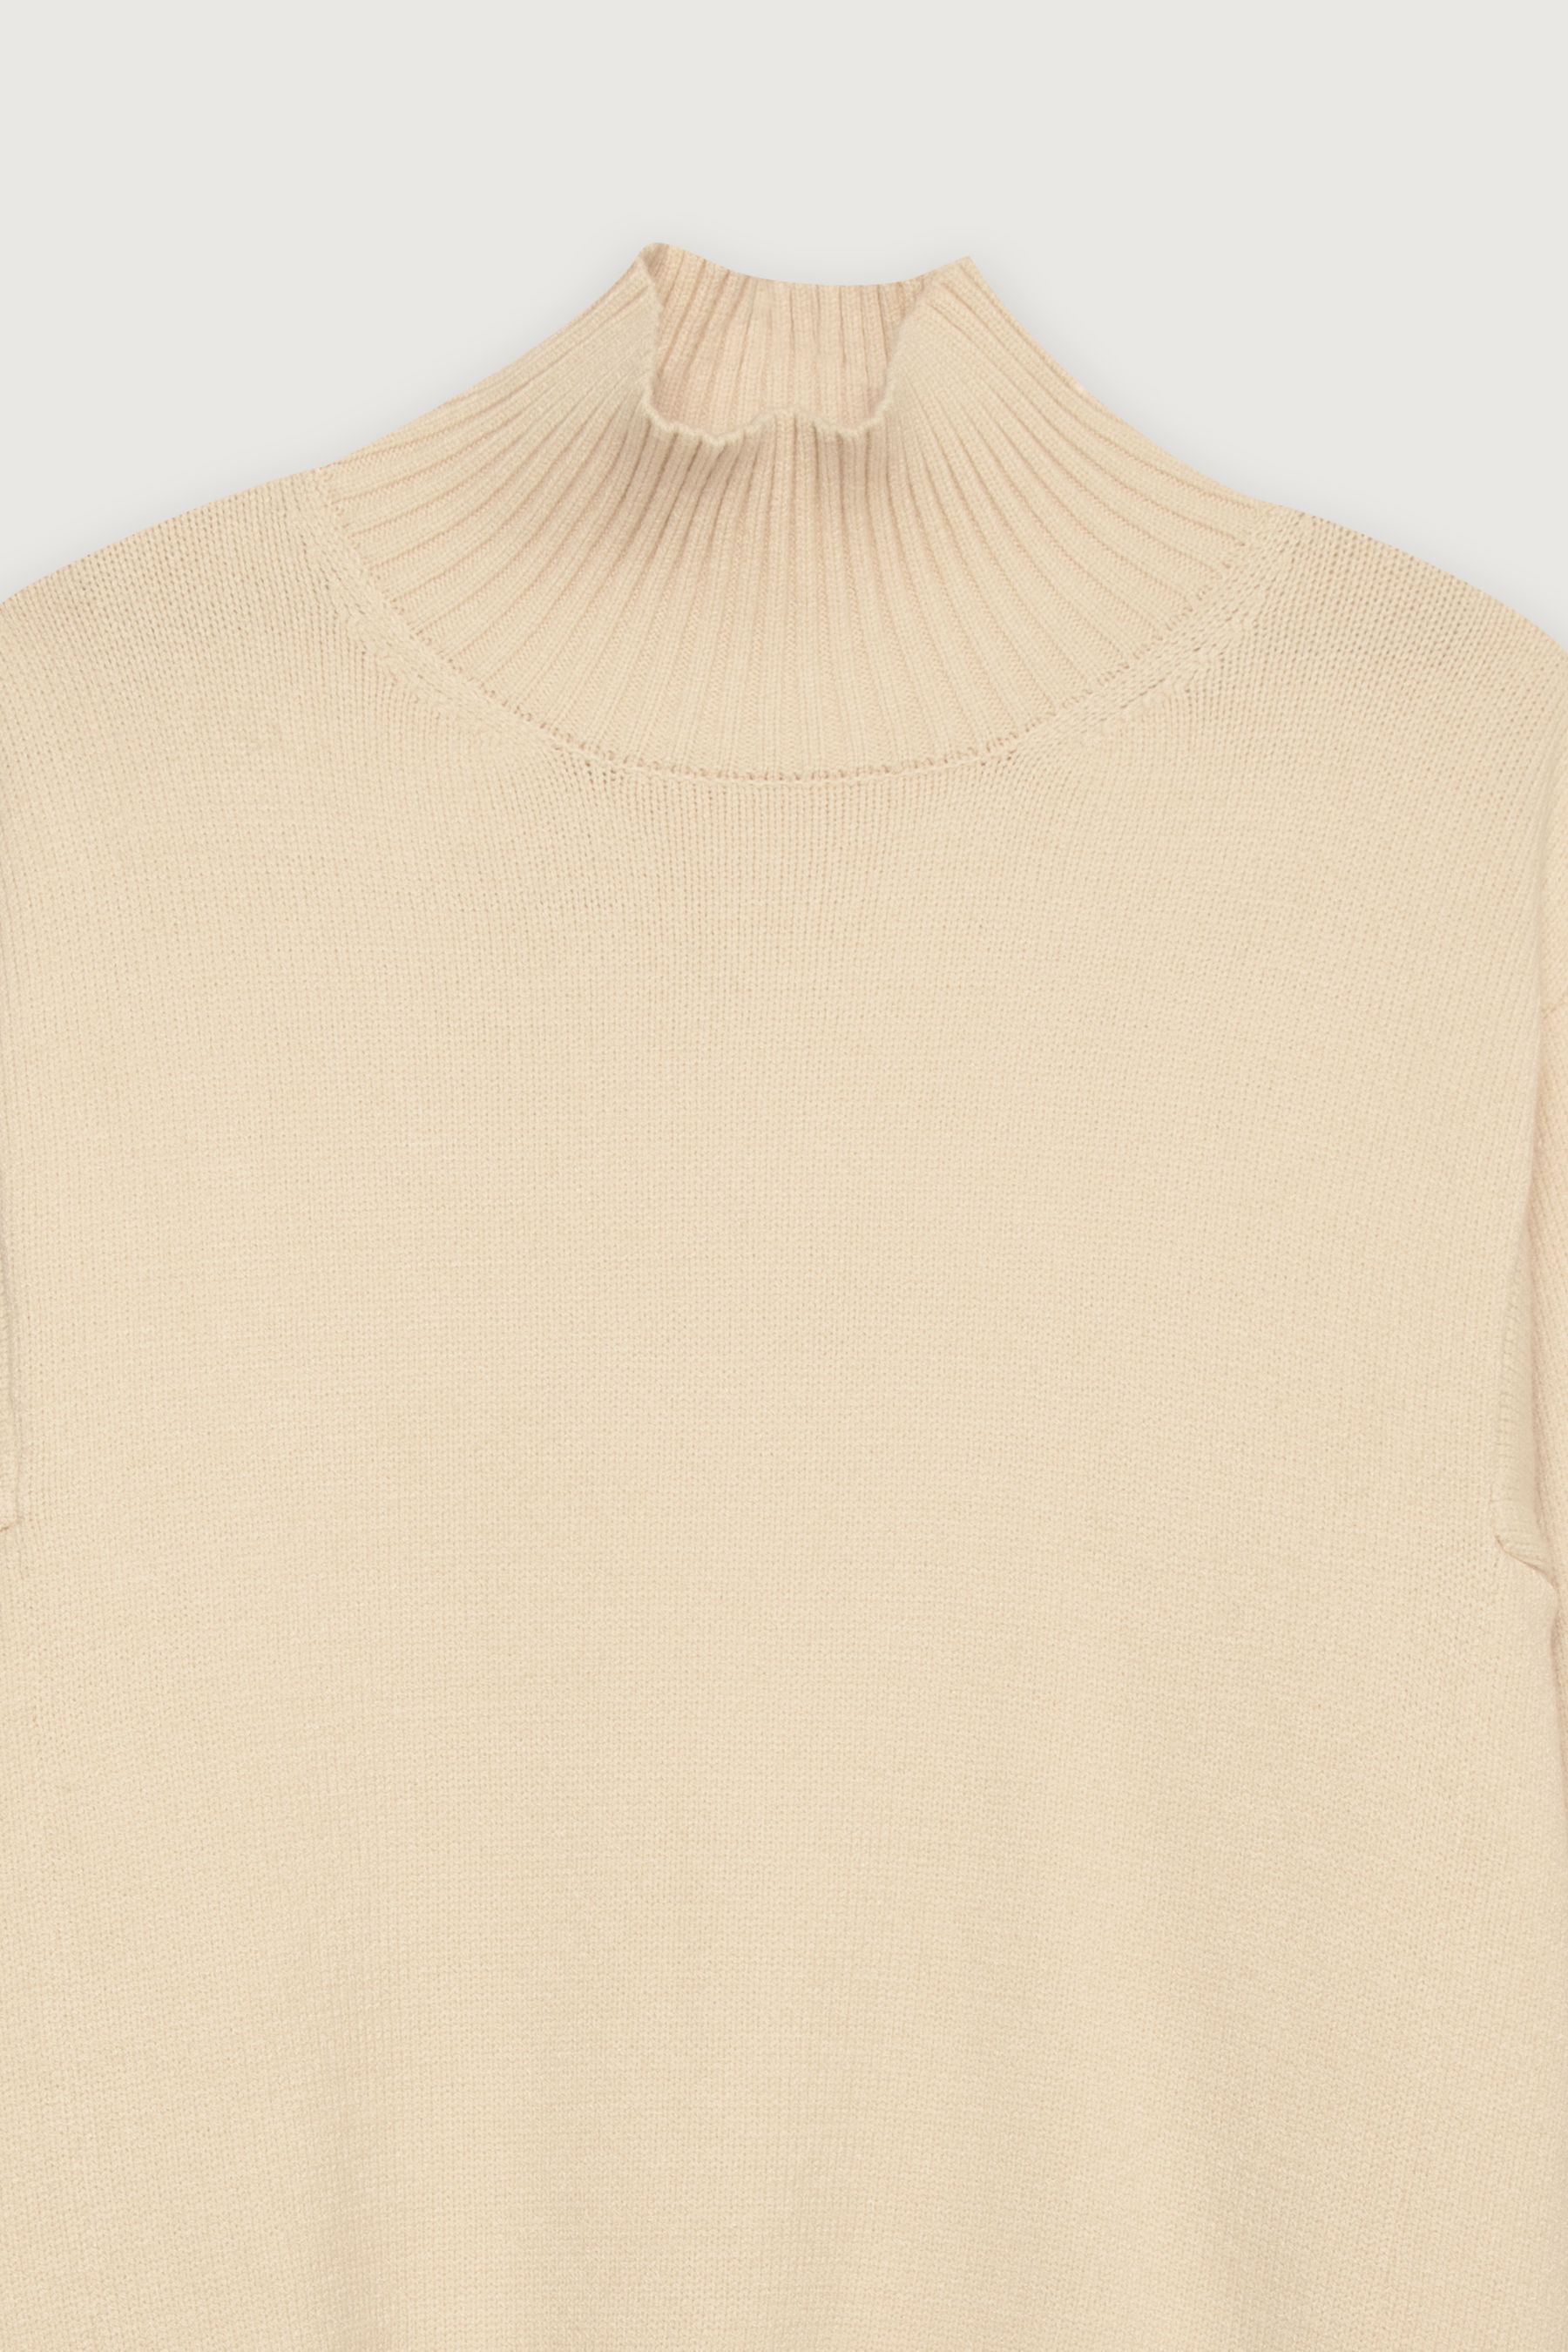 Sweater 7857 Oatmeal 6